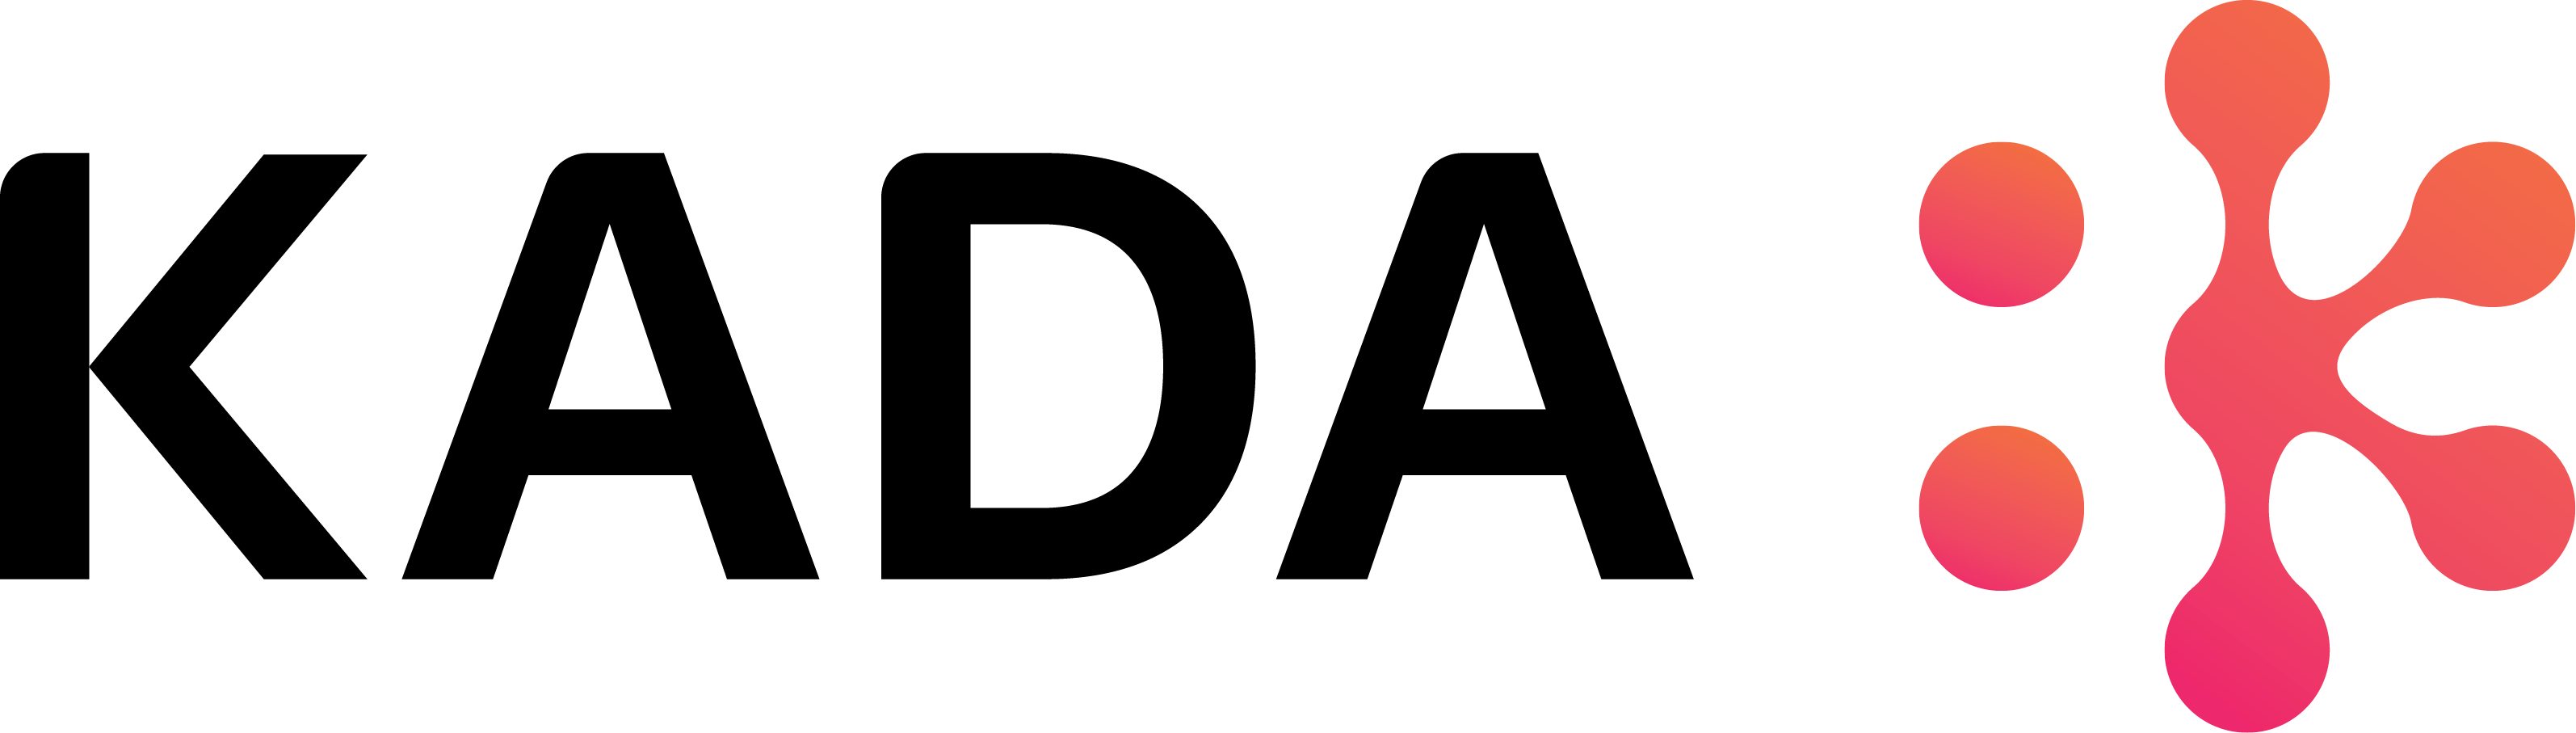 KADA Research Logo